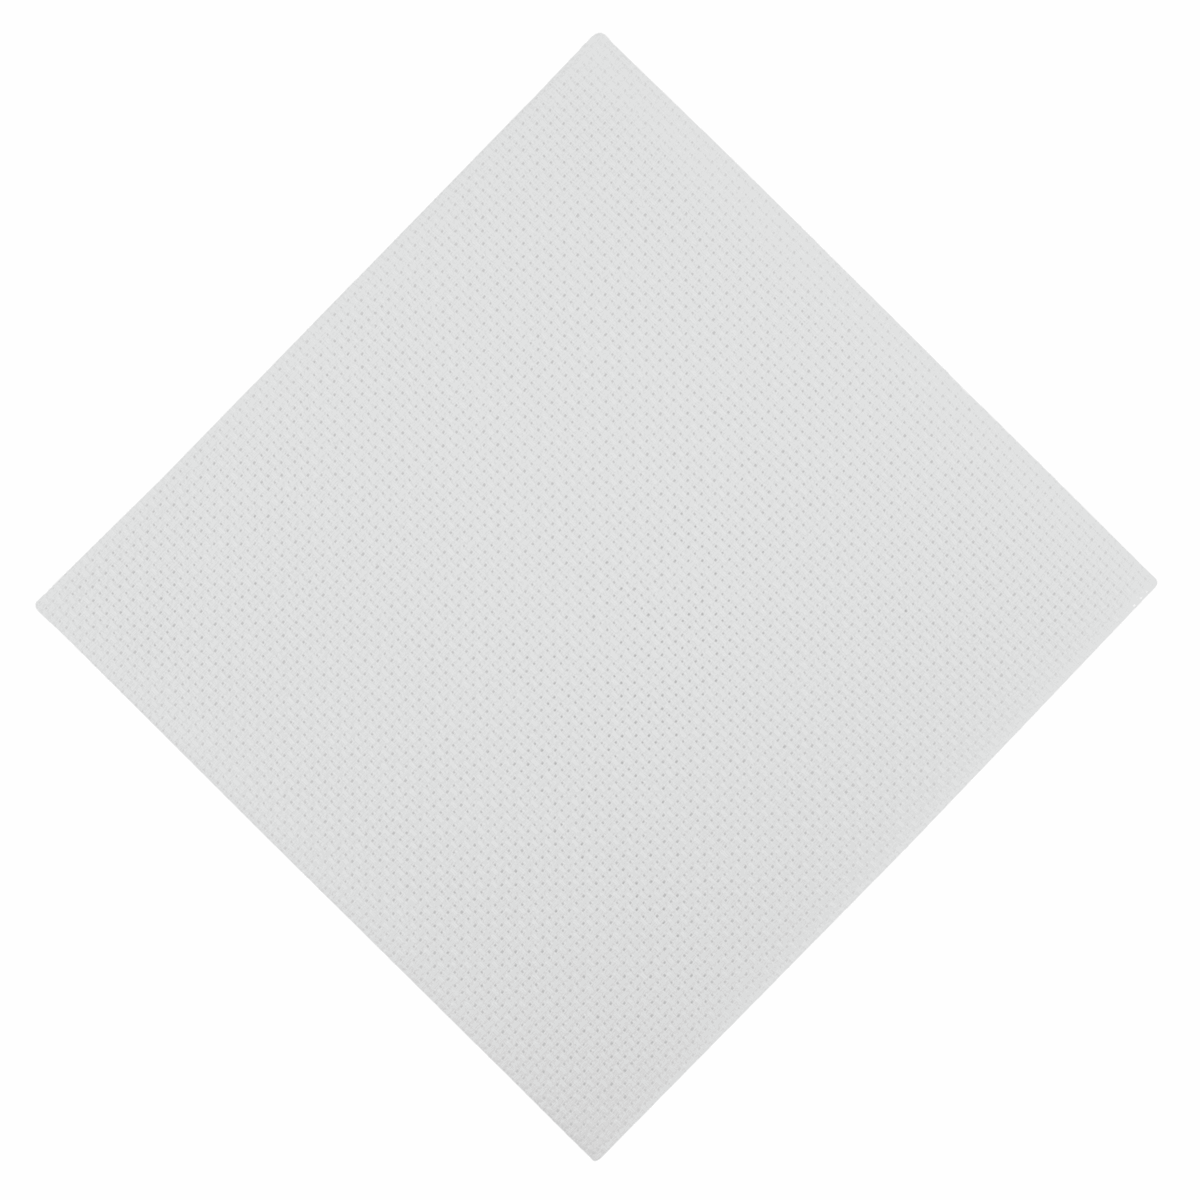 Aida Needlecraft Fabric - 14 Count - 45 x 30cm - White